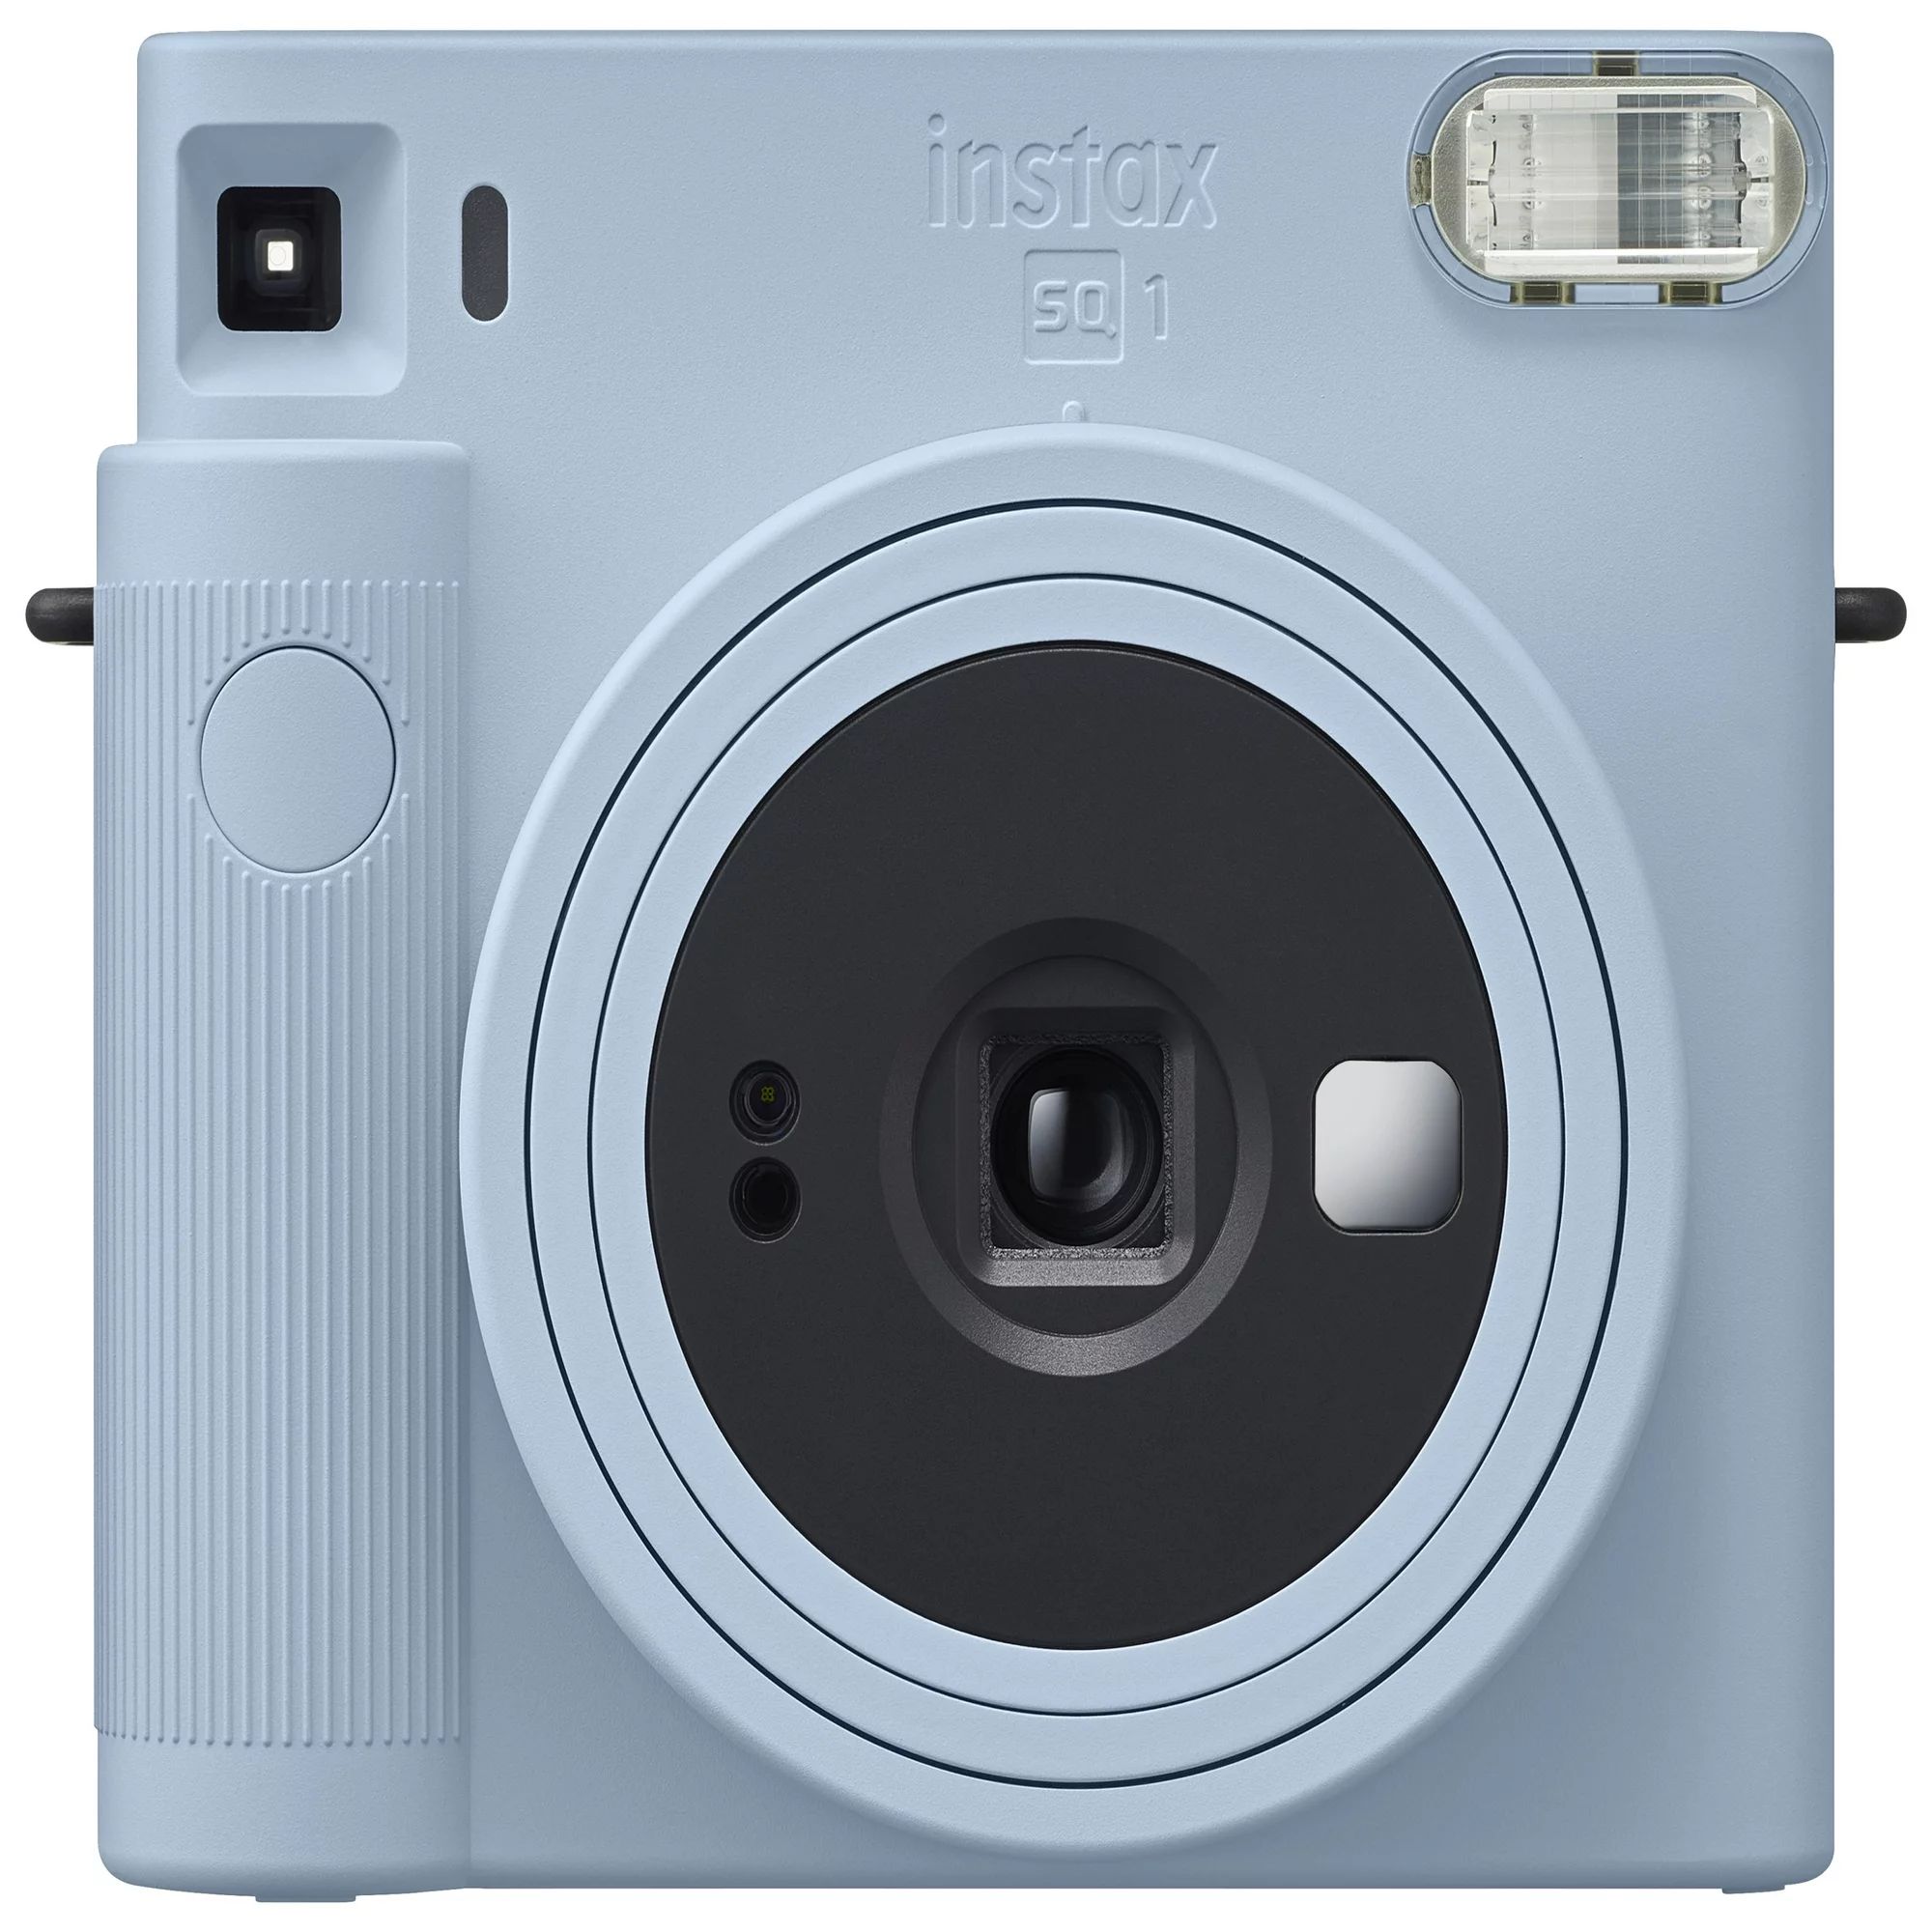 Fujifilm INSTAX SQUARE SQ1 instant camera - Blue | Walmart (US)